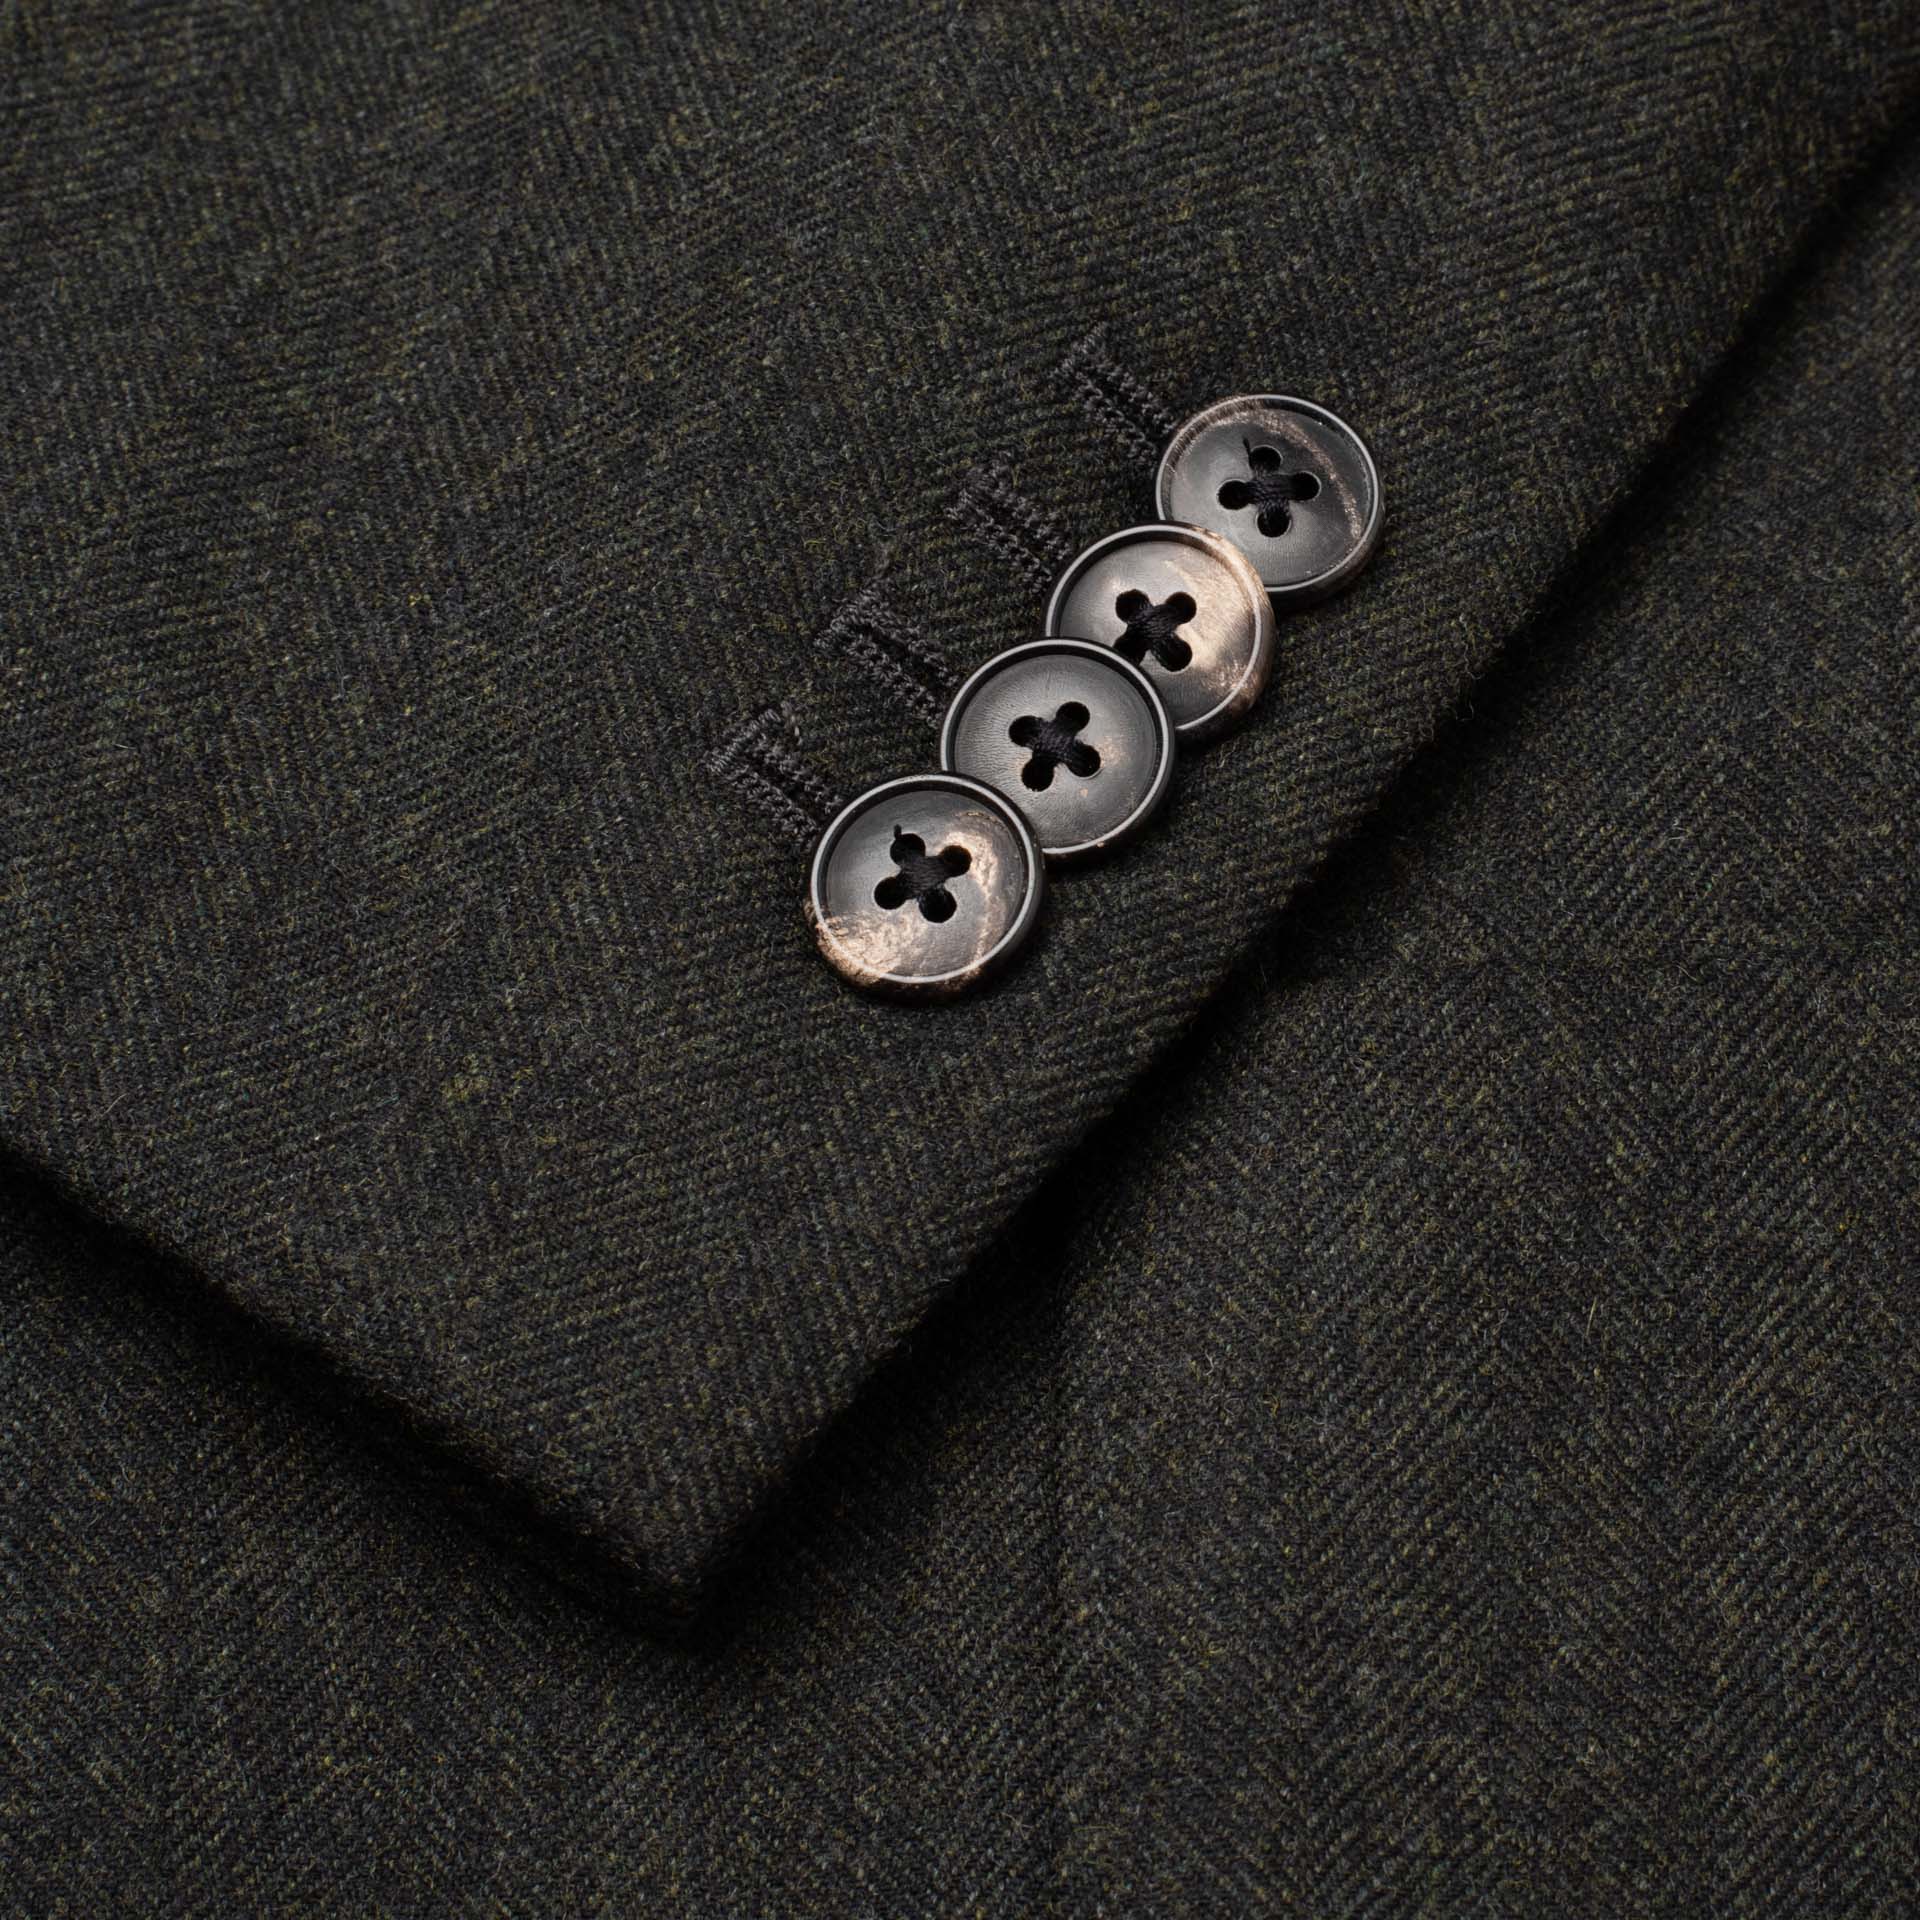 BOGLIOLI "K. Jacket" Olive Herringbone Wool Unlined Flannel Suit 50 NEW US 38 40 Slim